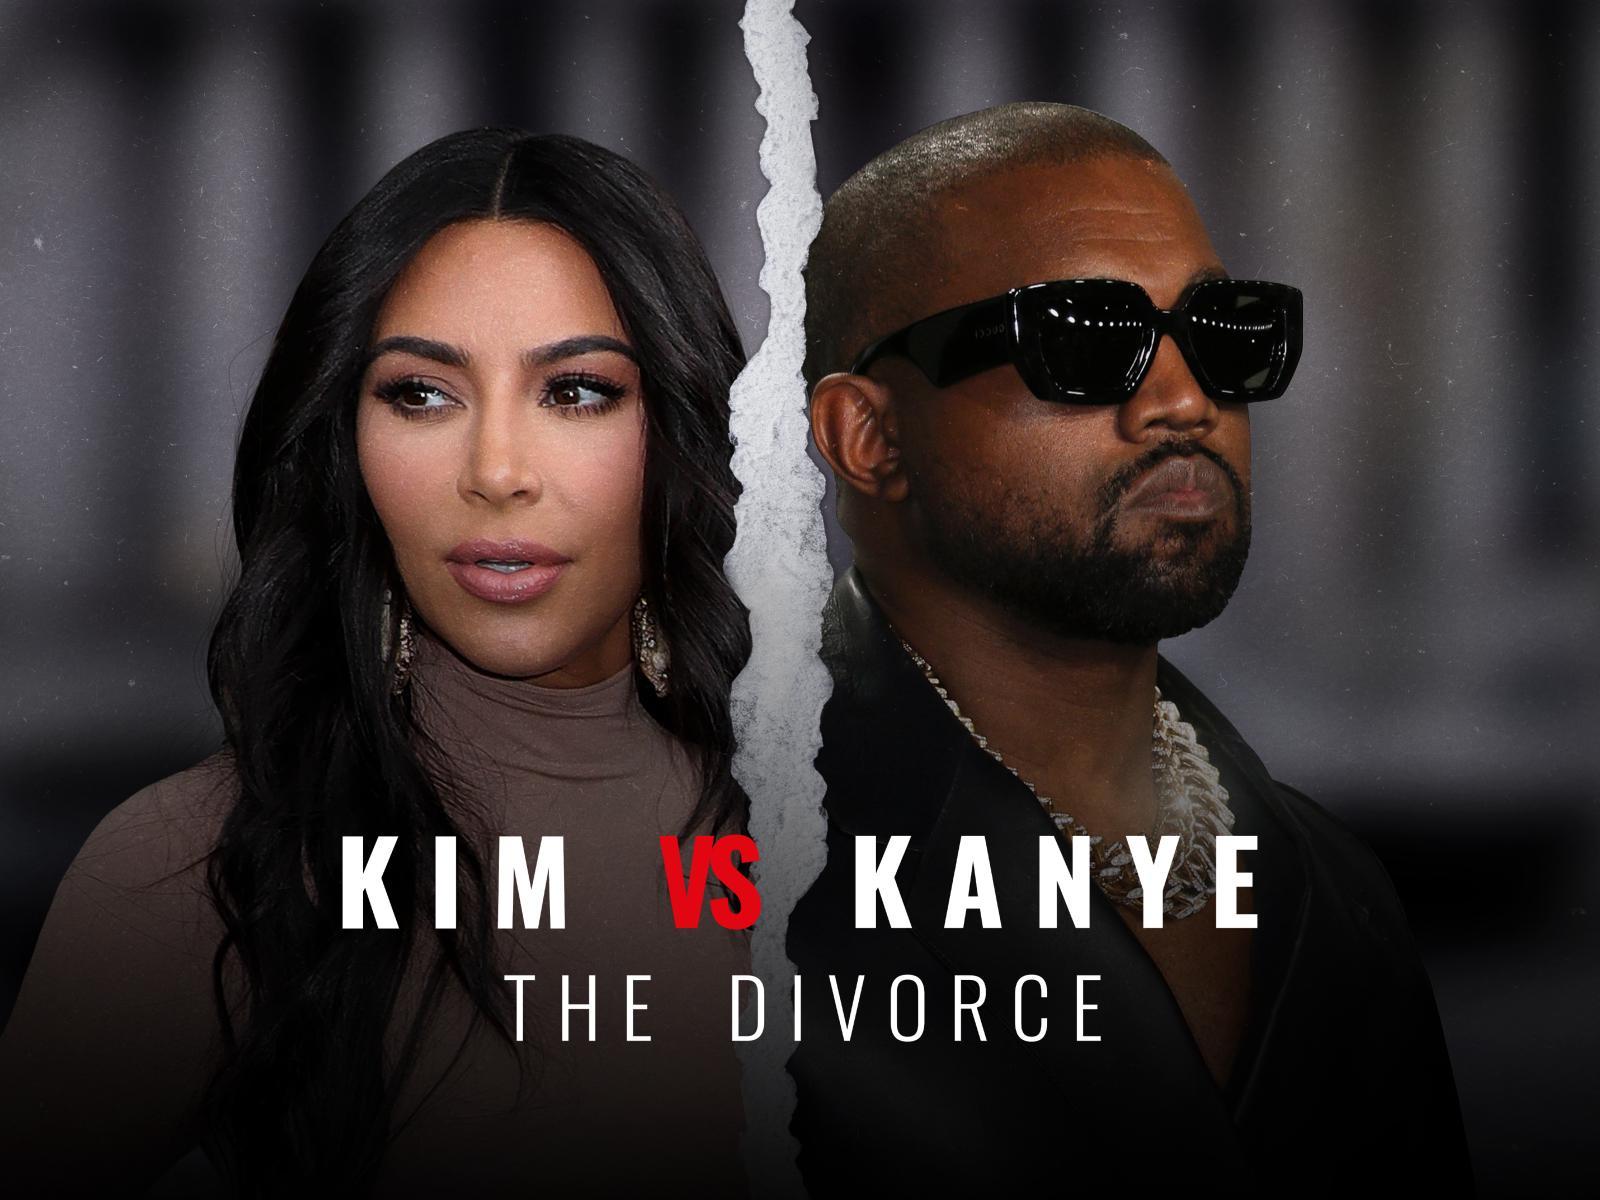 Image gallery for Kim vs Kanye: The Divorce (TV Miniseries) - FilmAffinity